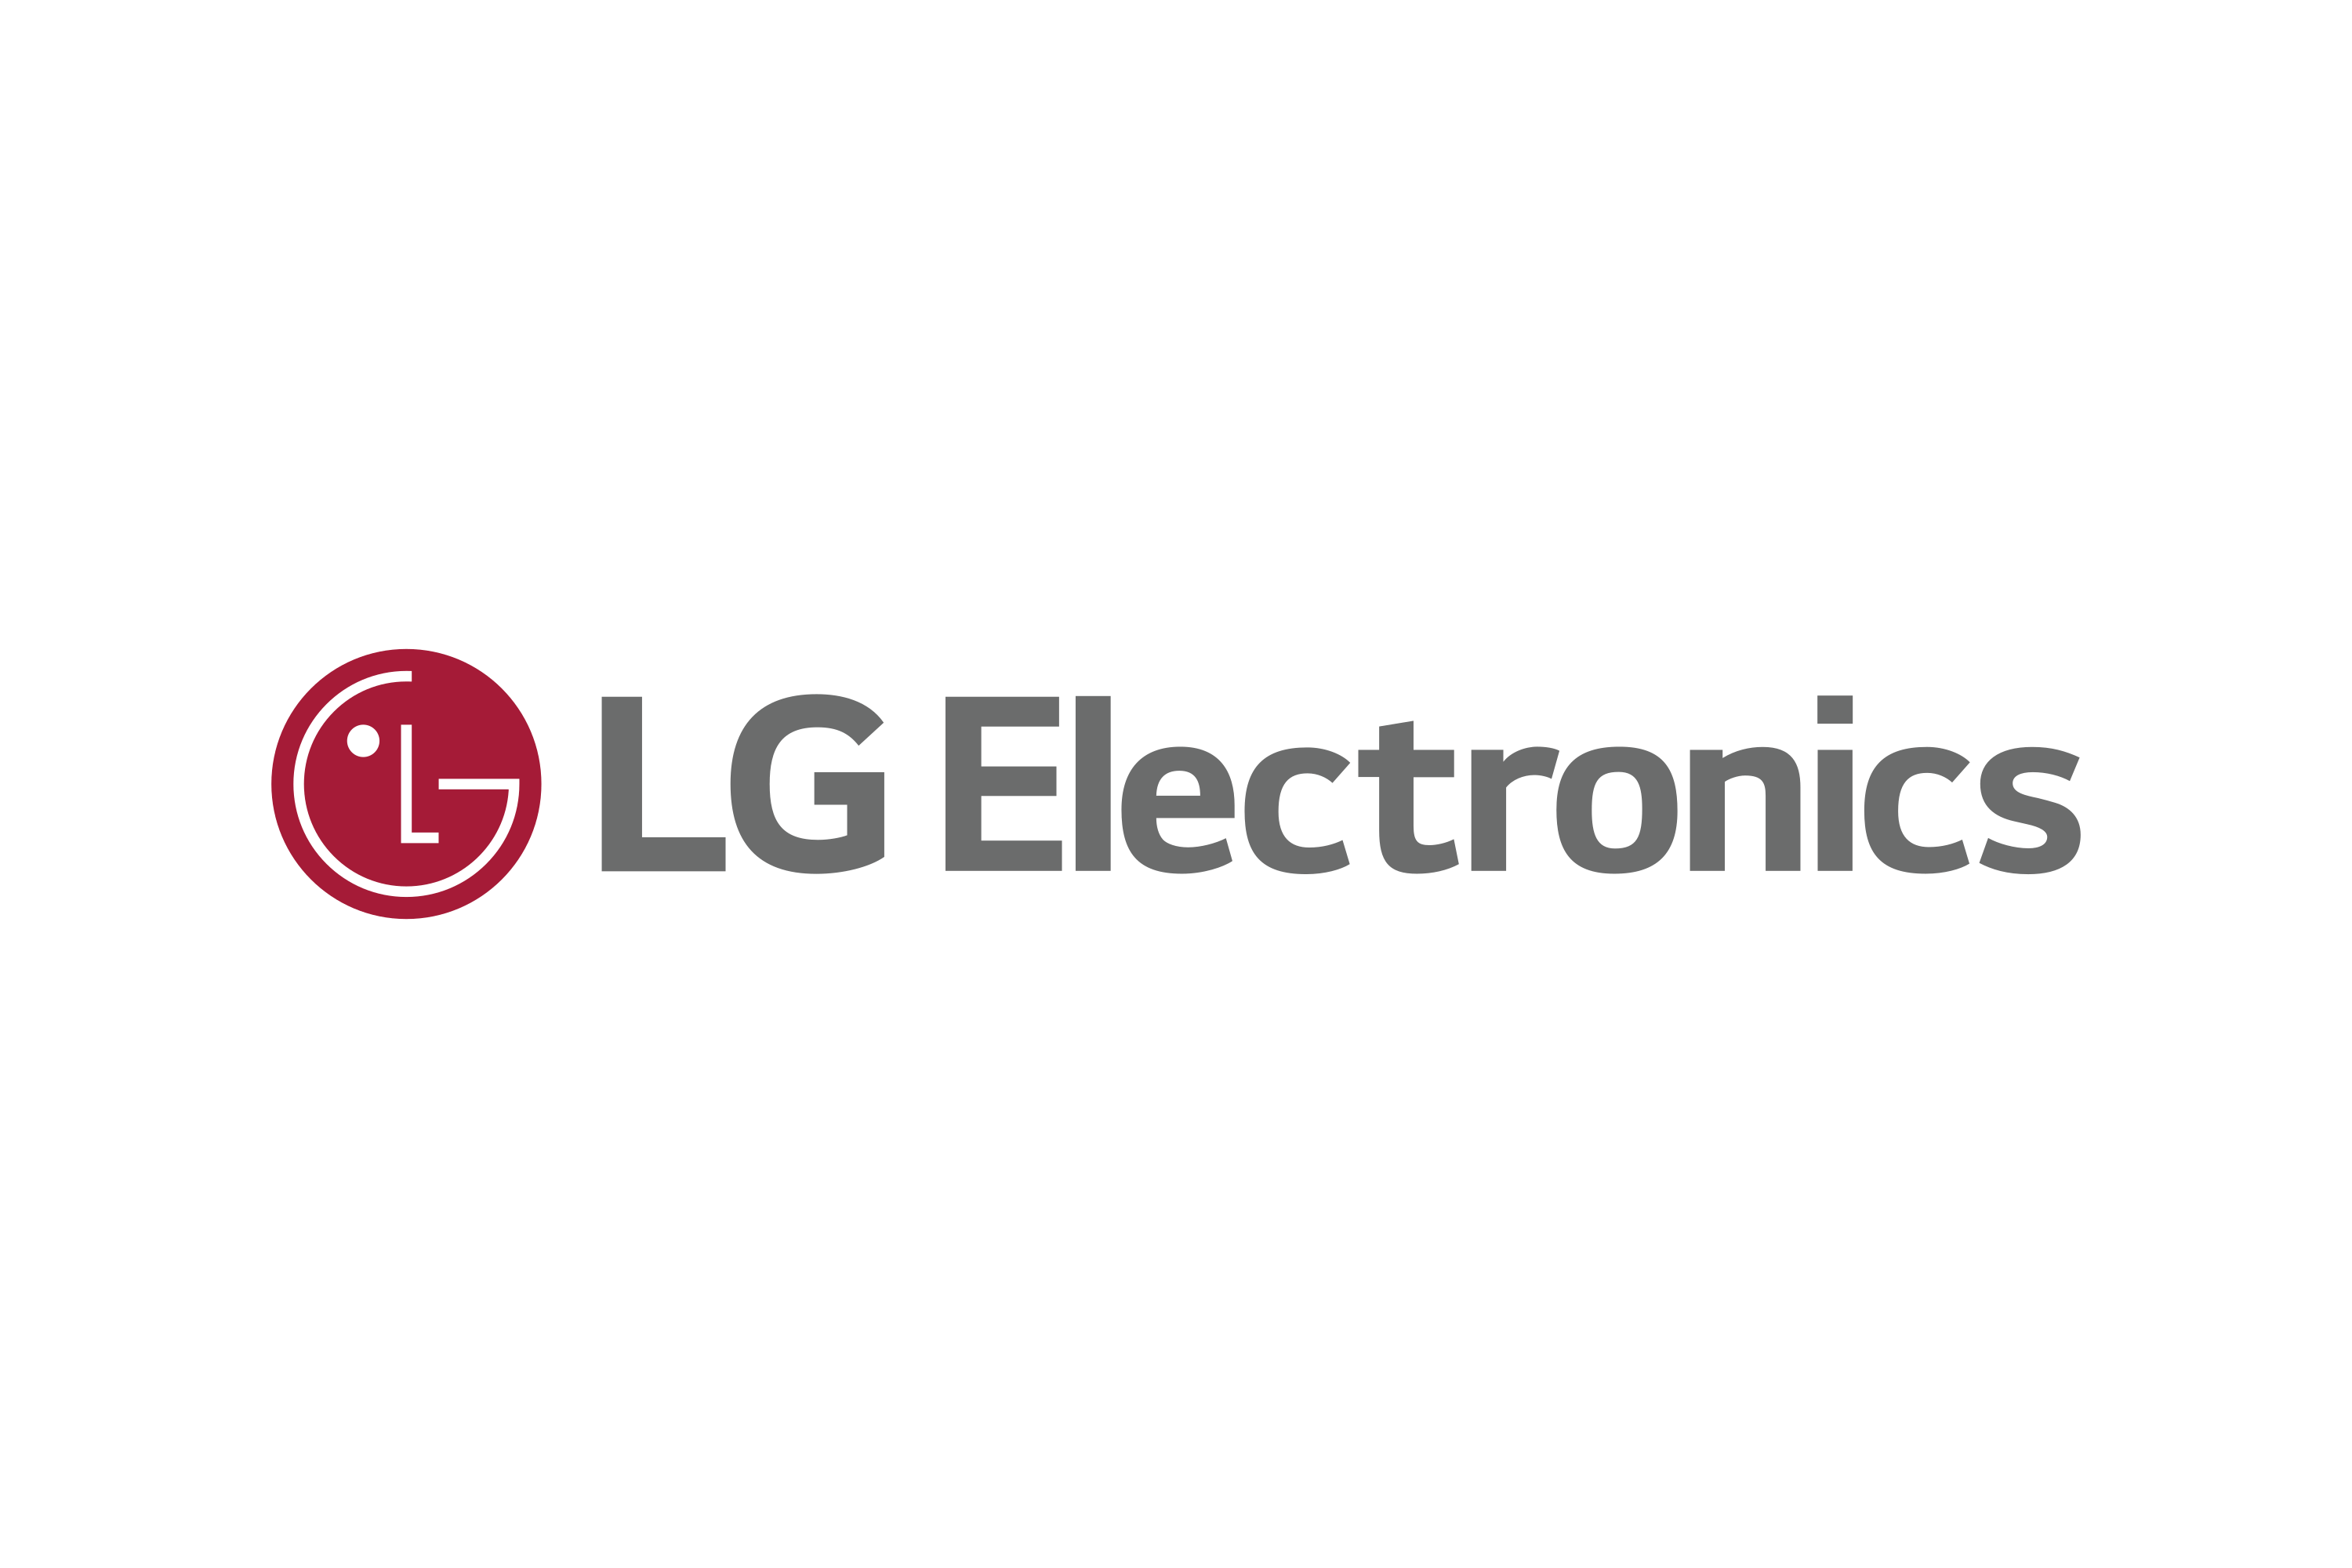 Download LG Electronics Logo in SVG Vector or PNG File Format - Logo.wine